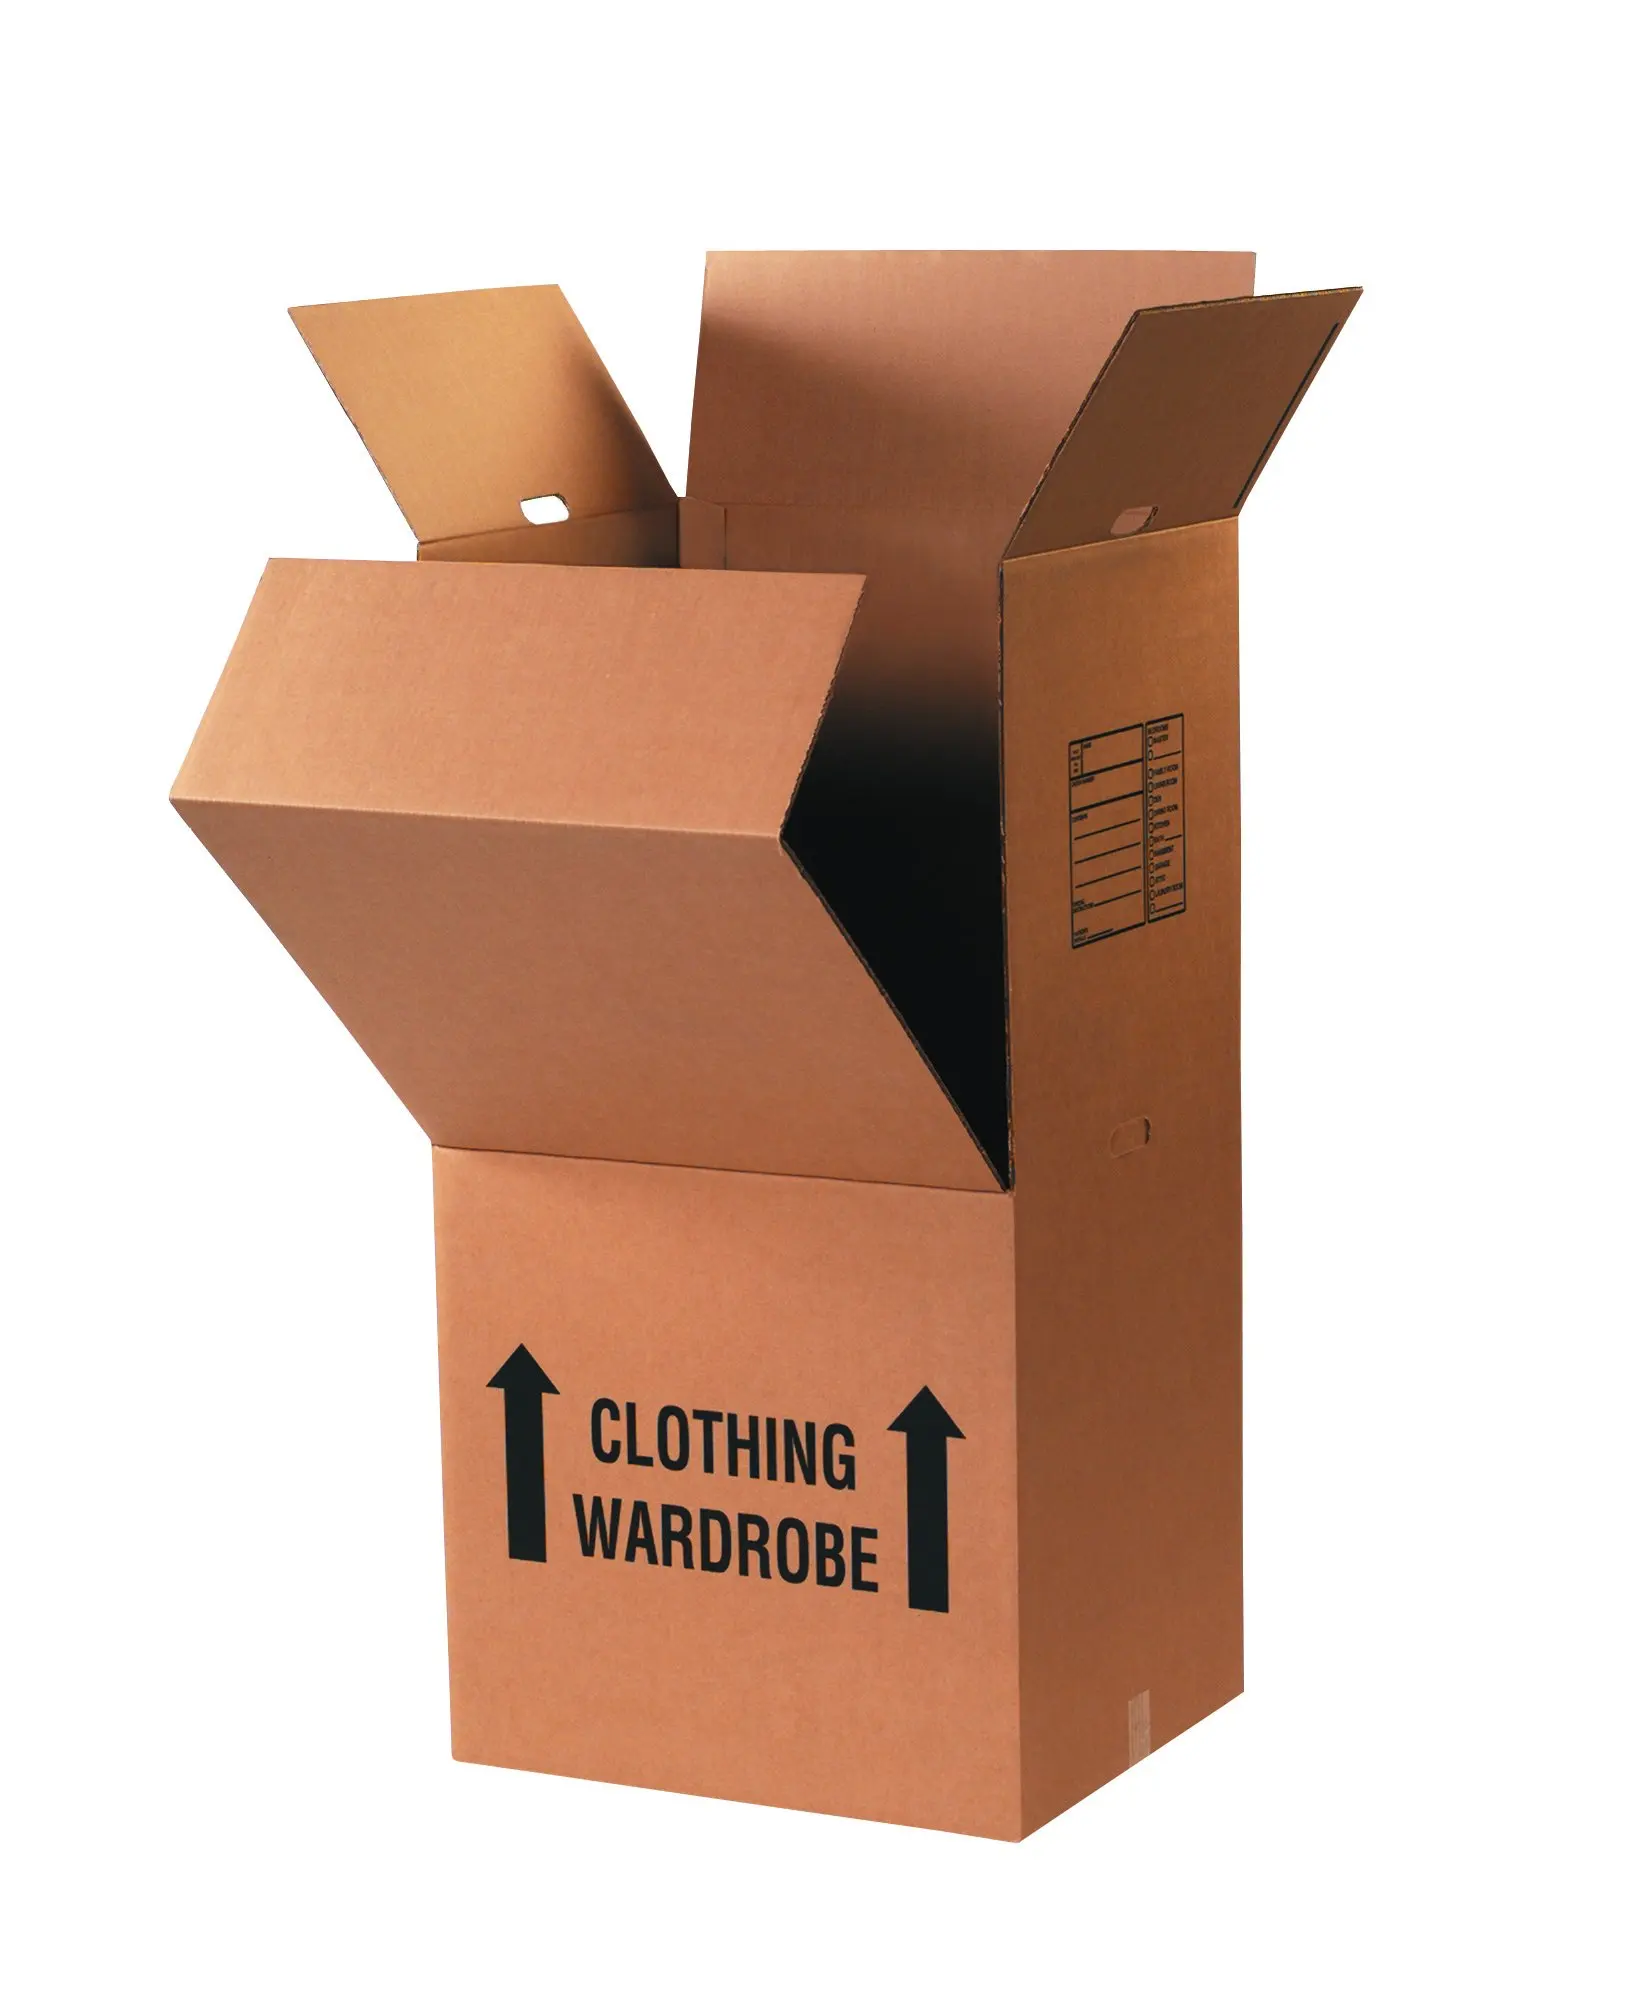 15 6x3x2 "EcoSwift" Brand Cardboard Box Packing Mailing Shipping Corrugated